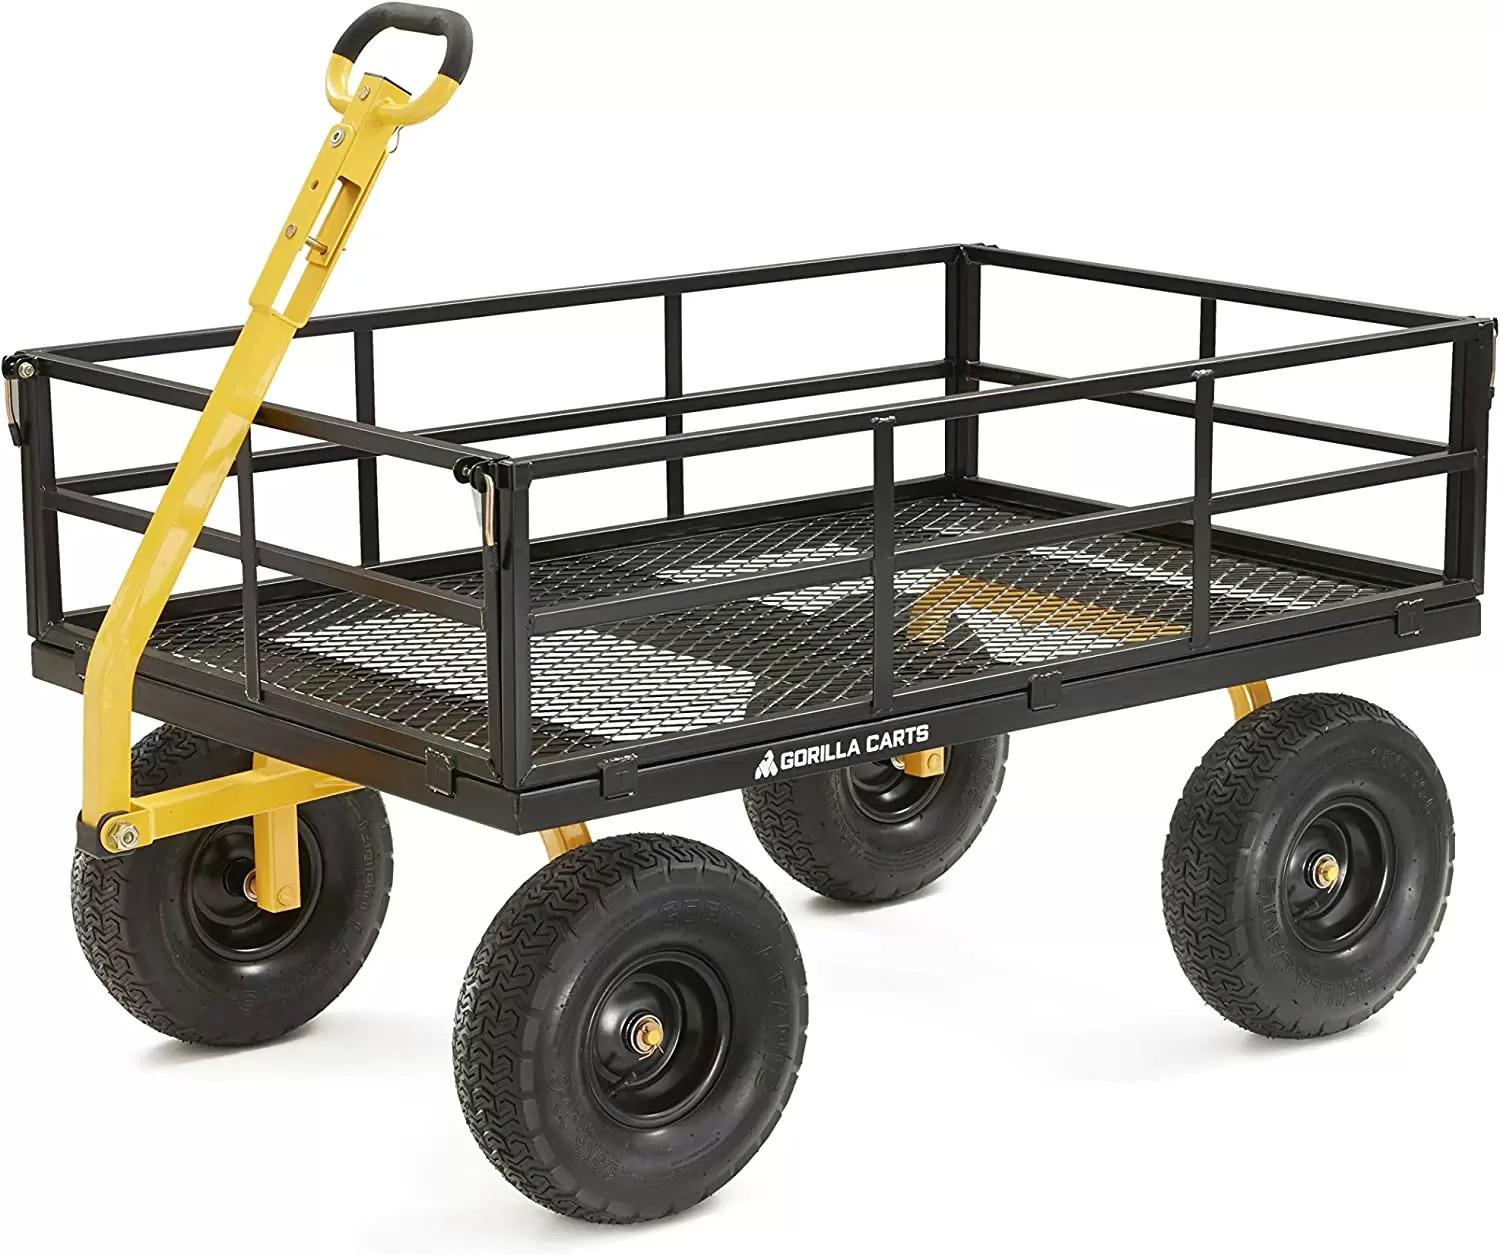 Gorilla Carts Heavy-Duty Steel Utility Cart for $137.95 Shipped